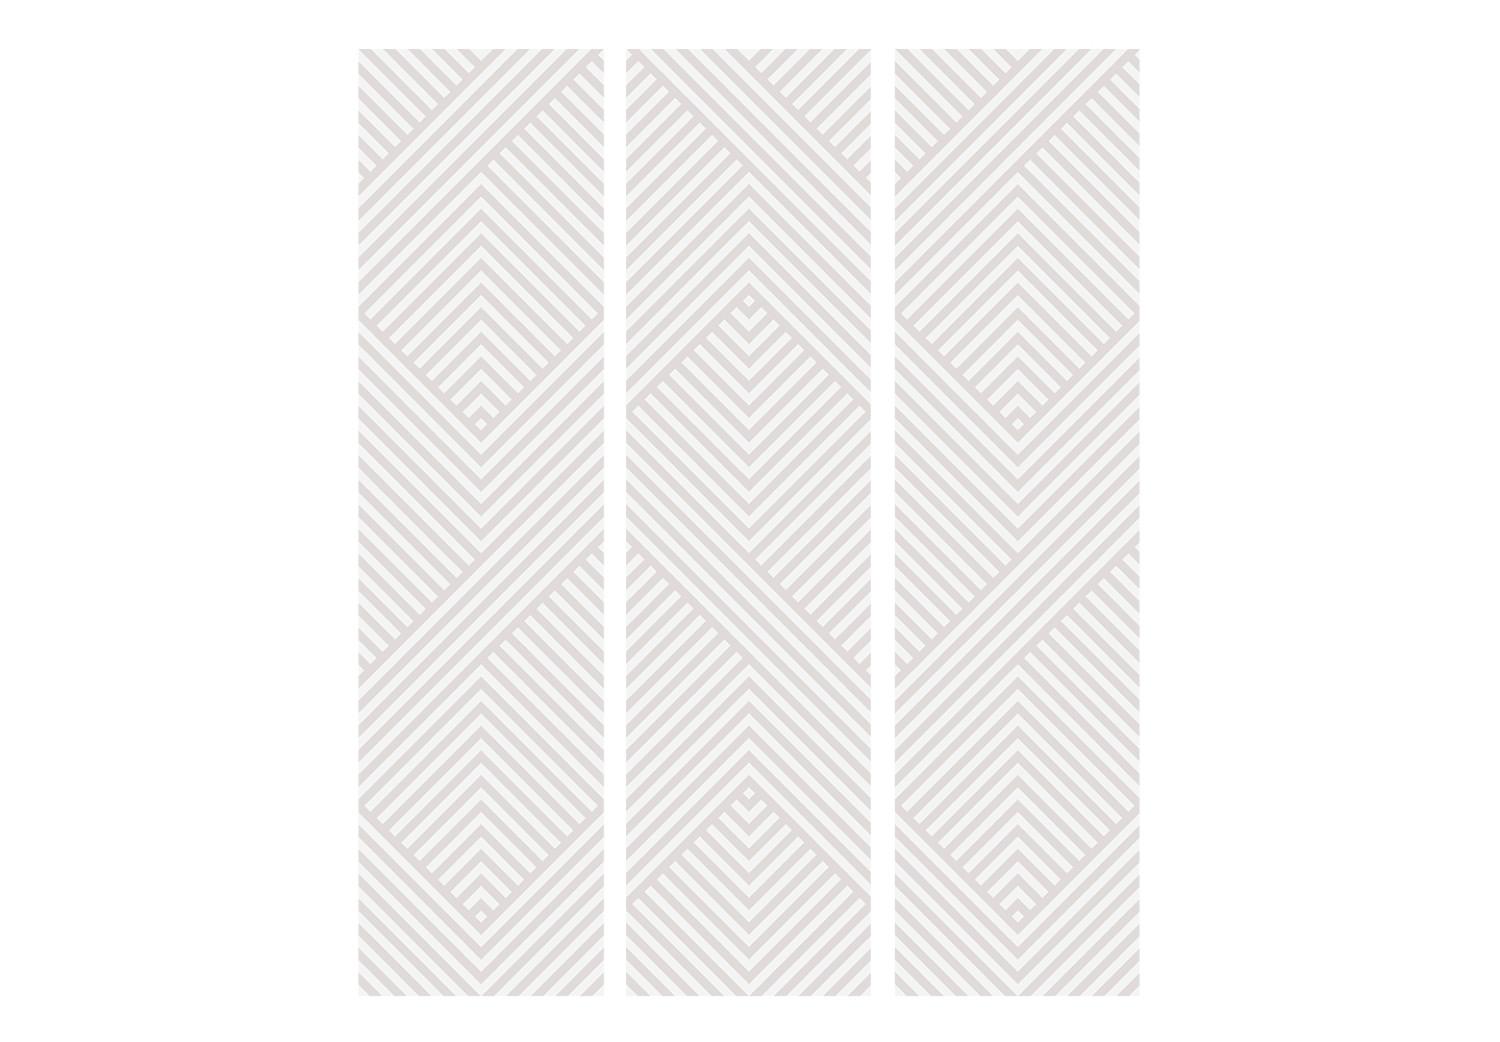 Room Divider Broken Lines (3-piece) - geometric pattern in shades of beige